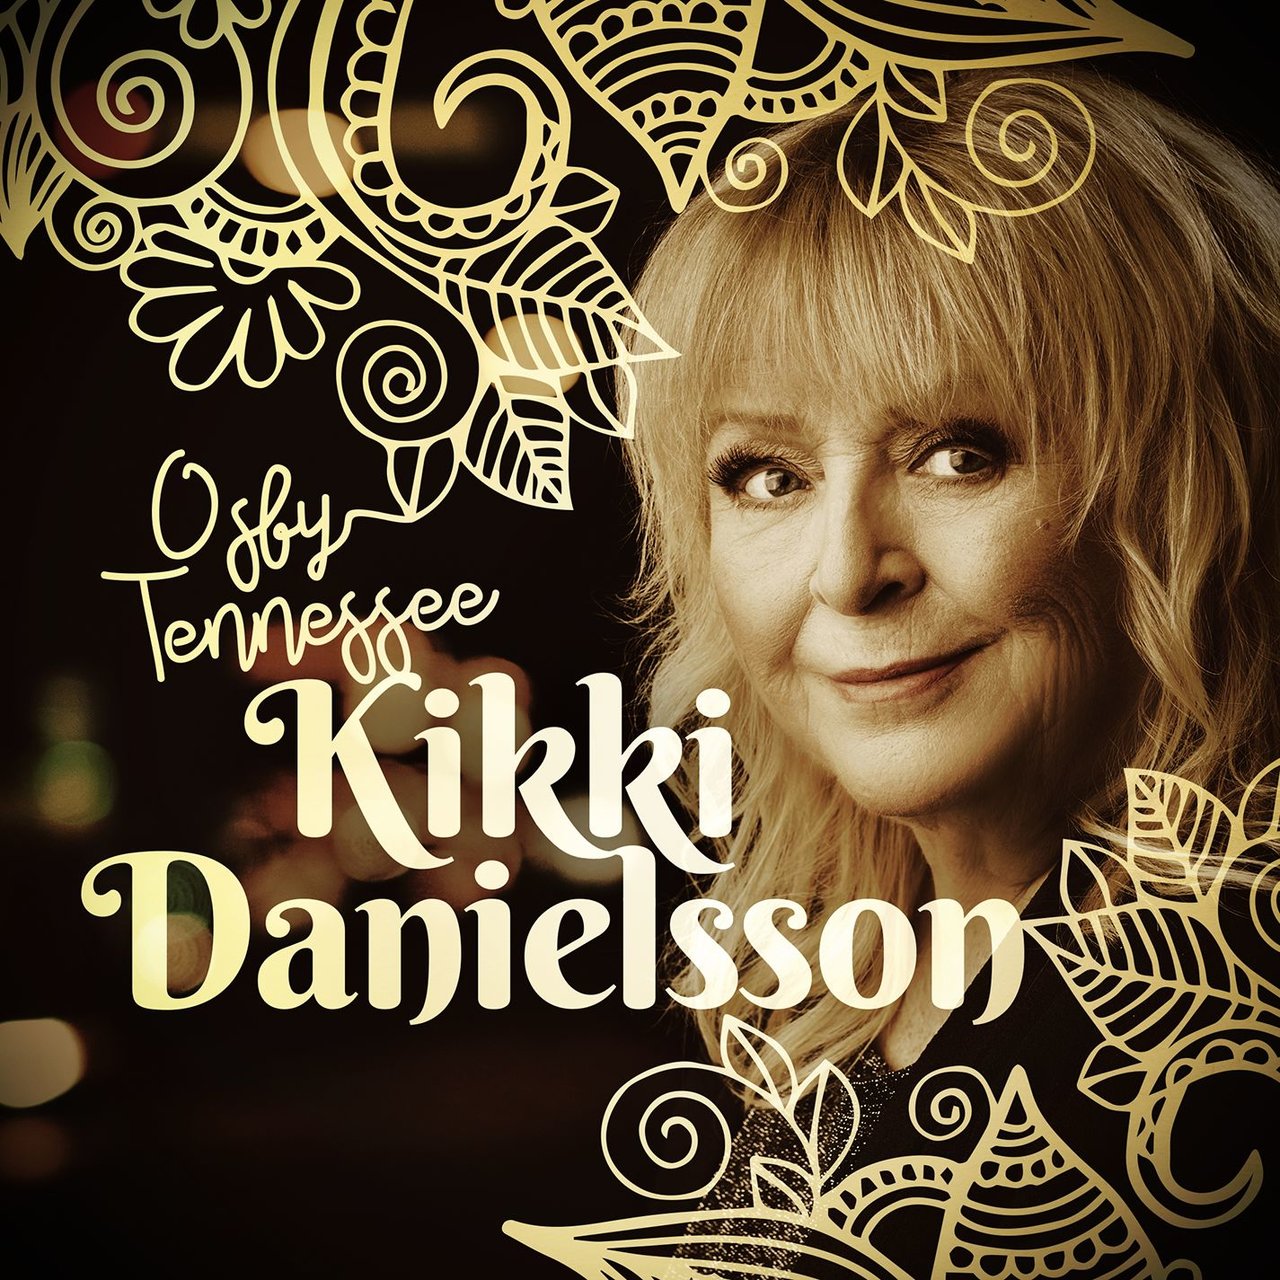 Kikki Danielsson Osby Tennessee cover artwork